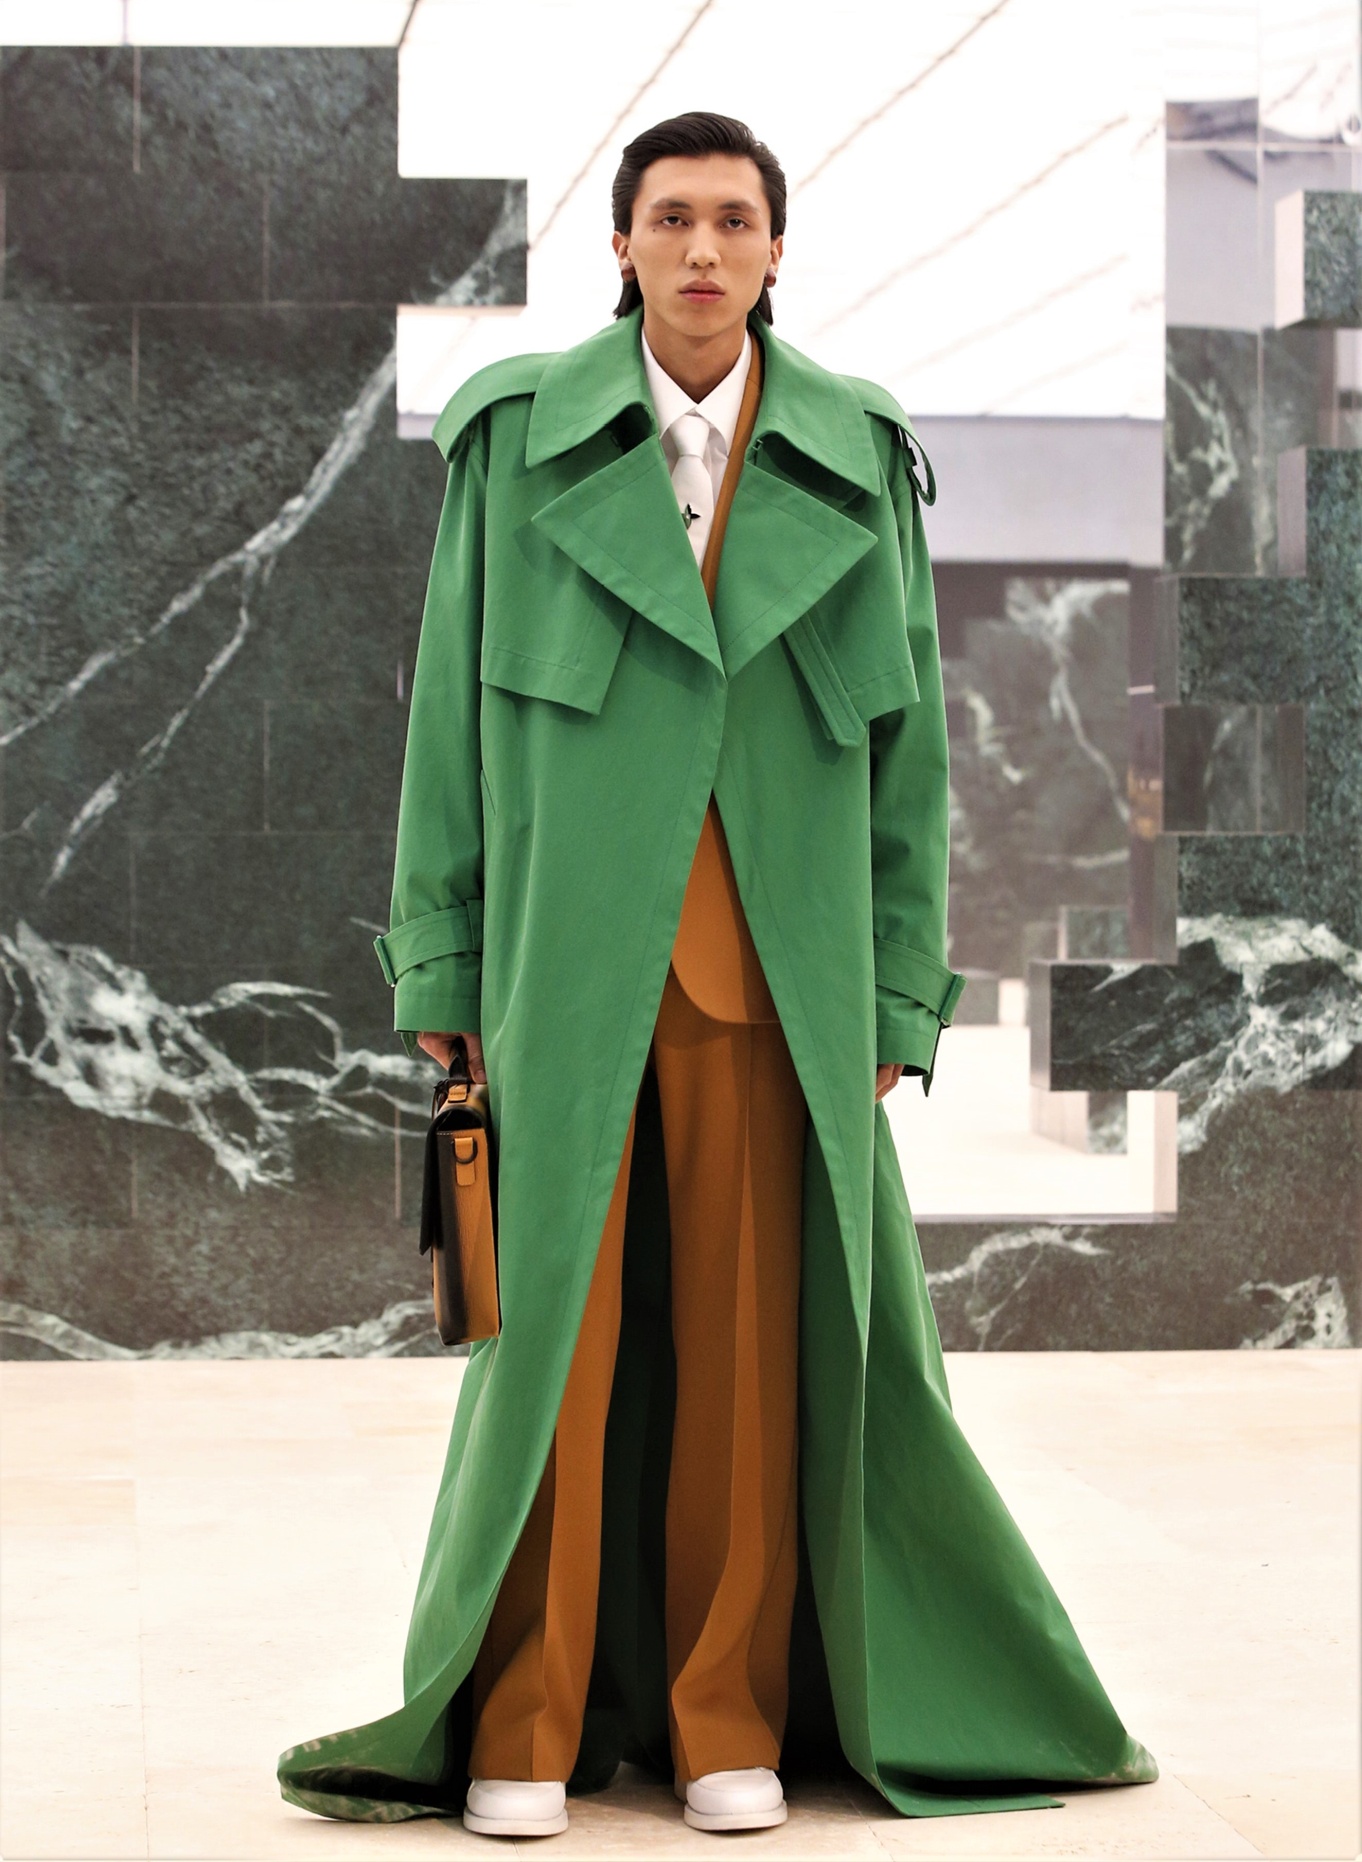 00024-Louis-Vuitton-Mens-Fall-21 green coat paris cropped.jpg